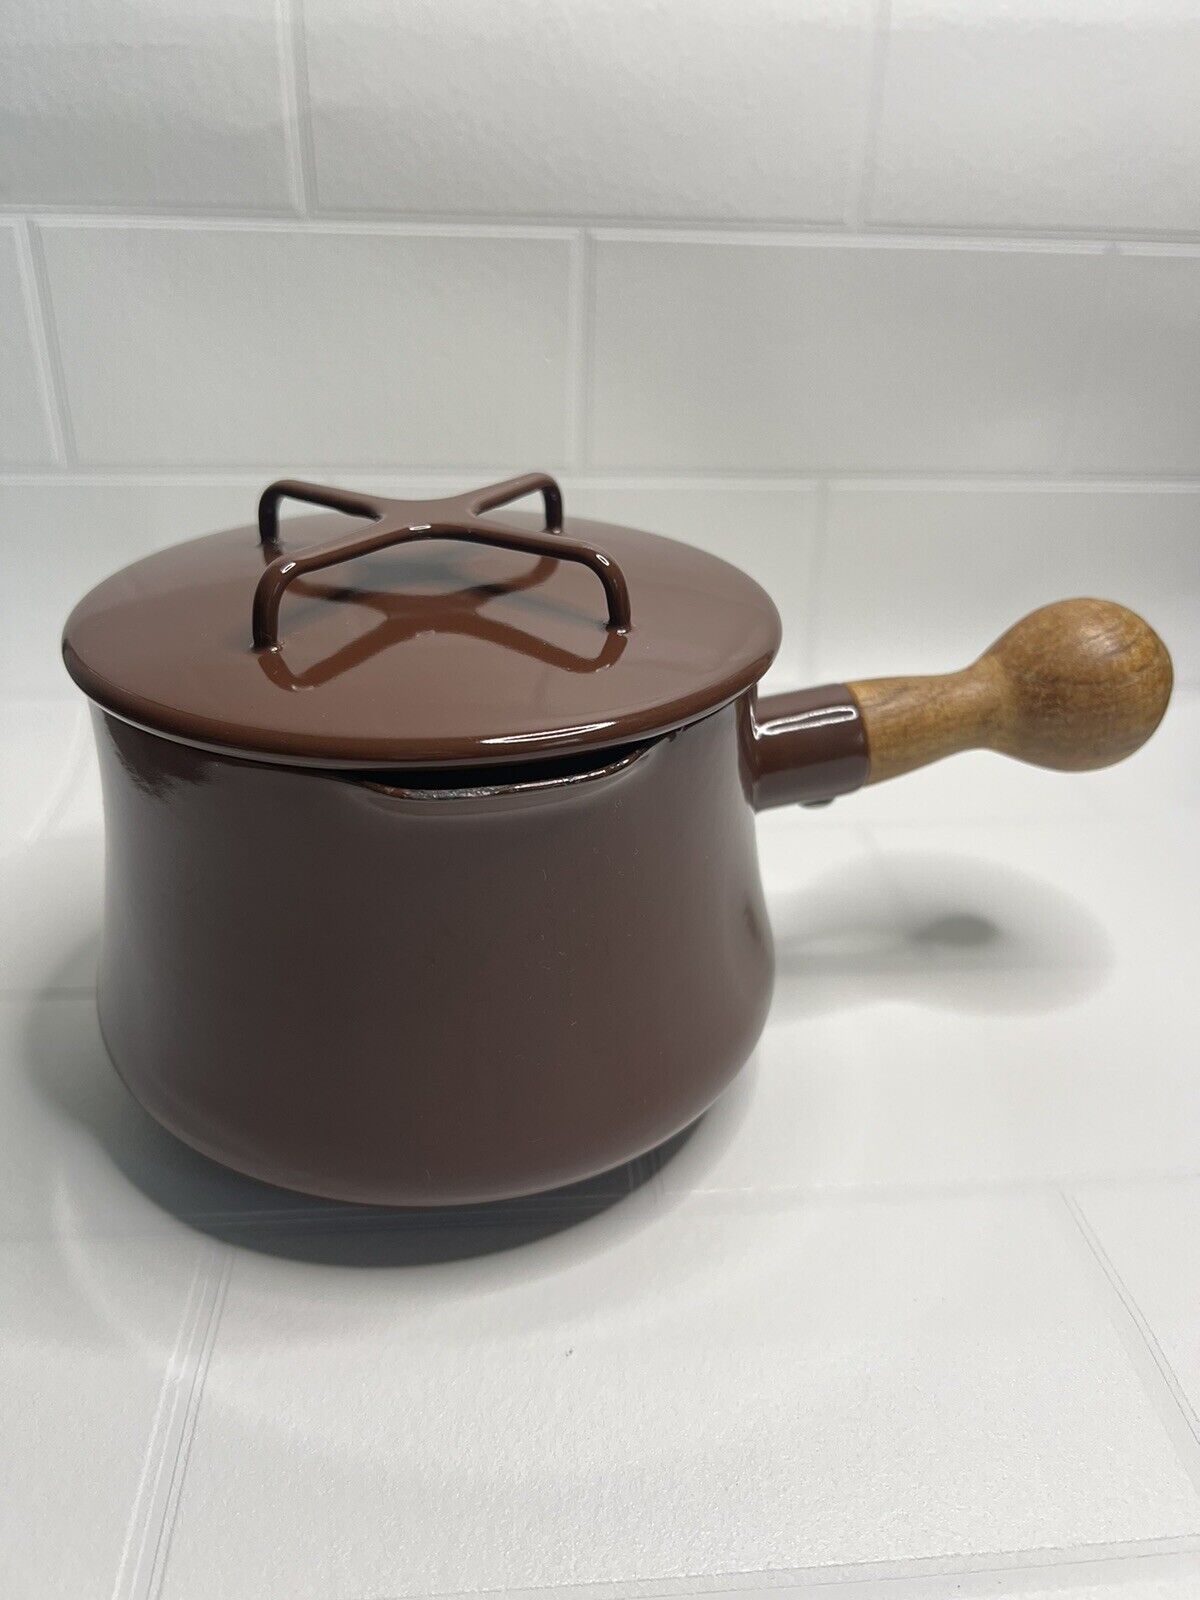 DANSK Kobenstyle Brown Enamel Sauce Pan Pot Wooden Handle Made in France w/ Lid